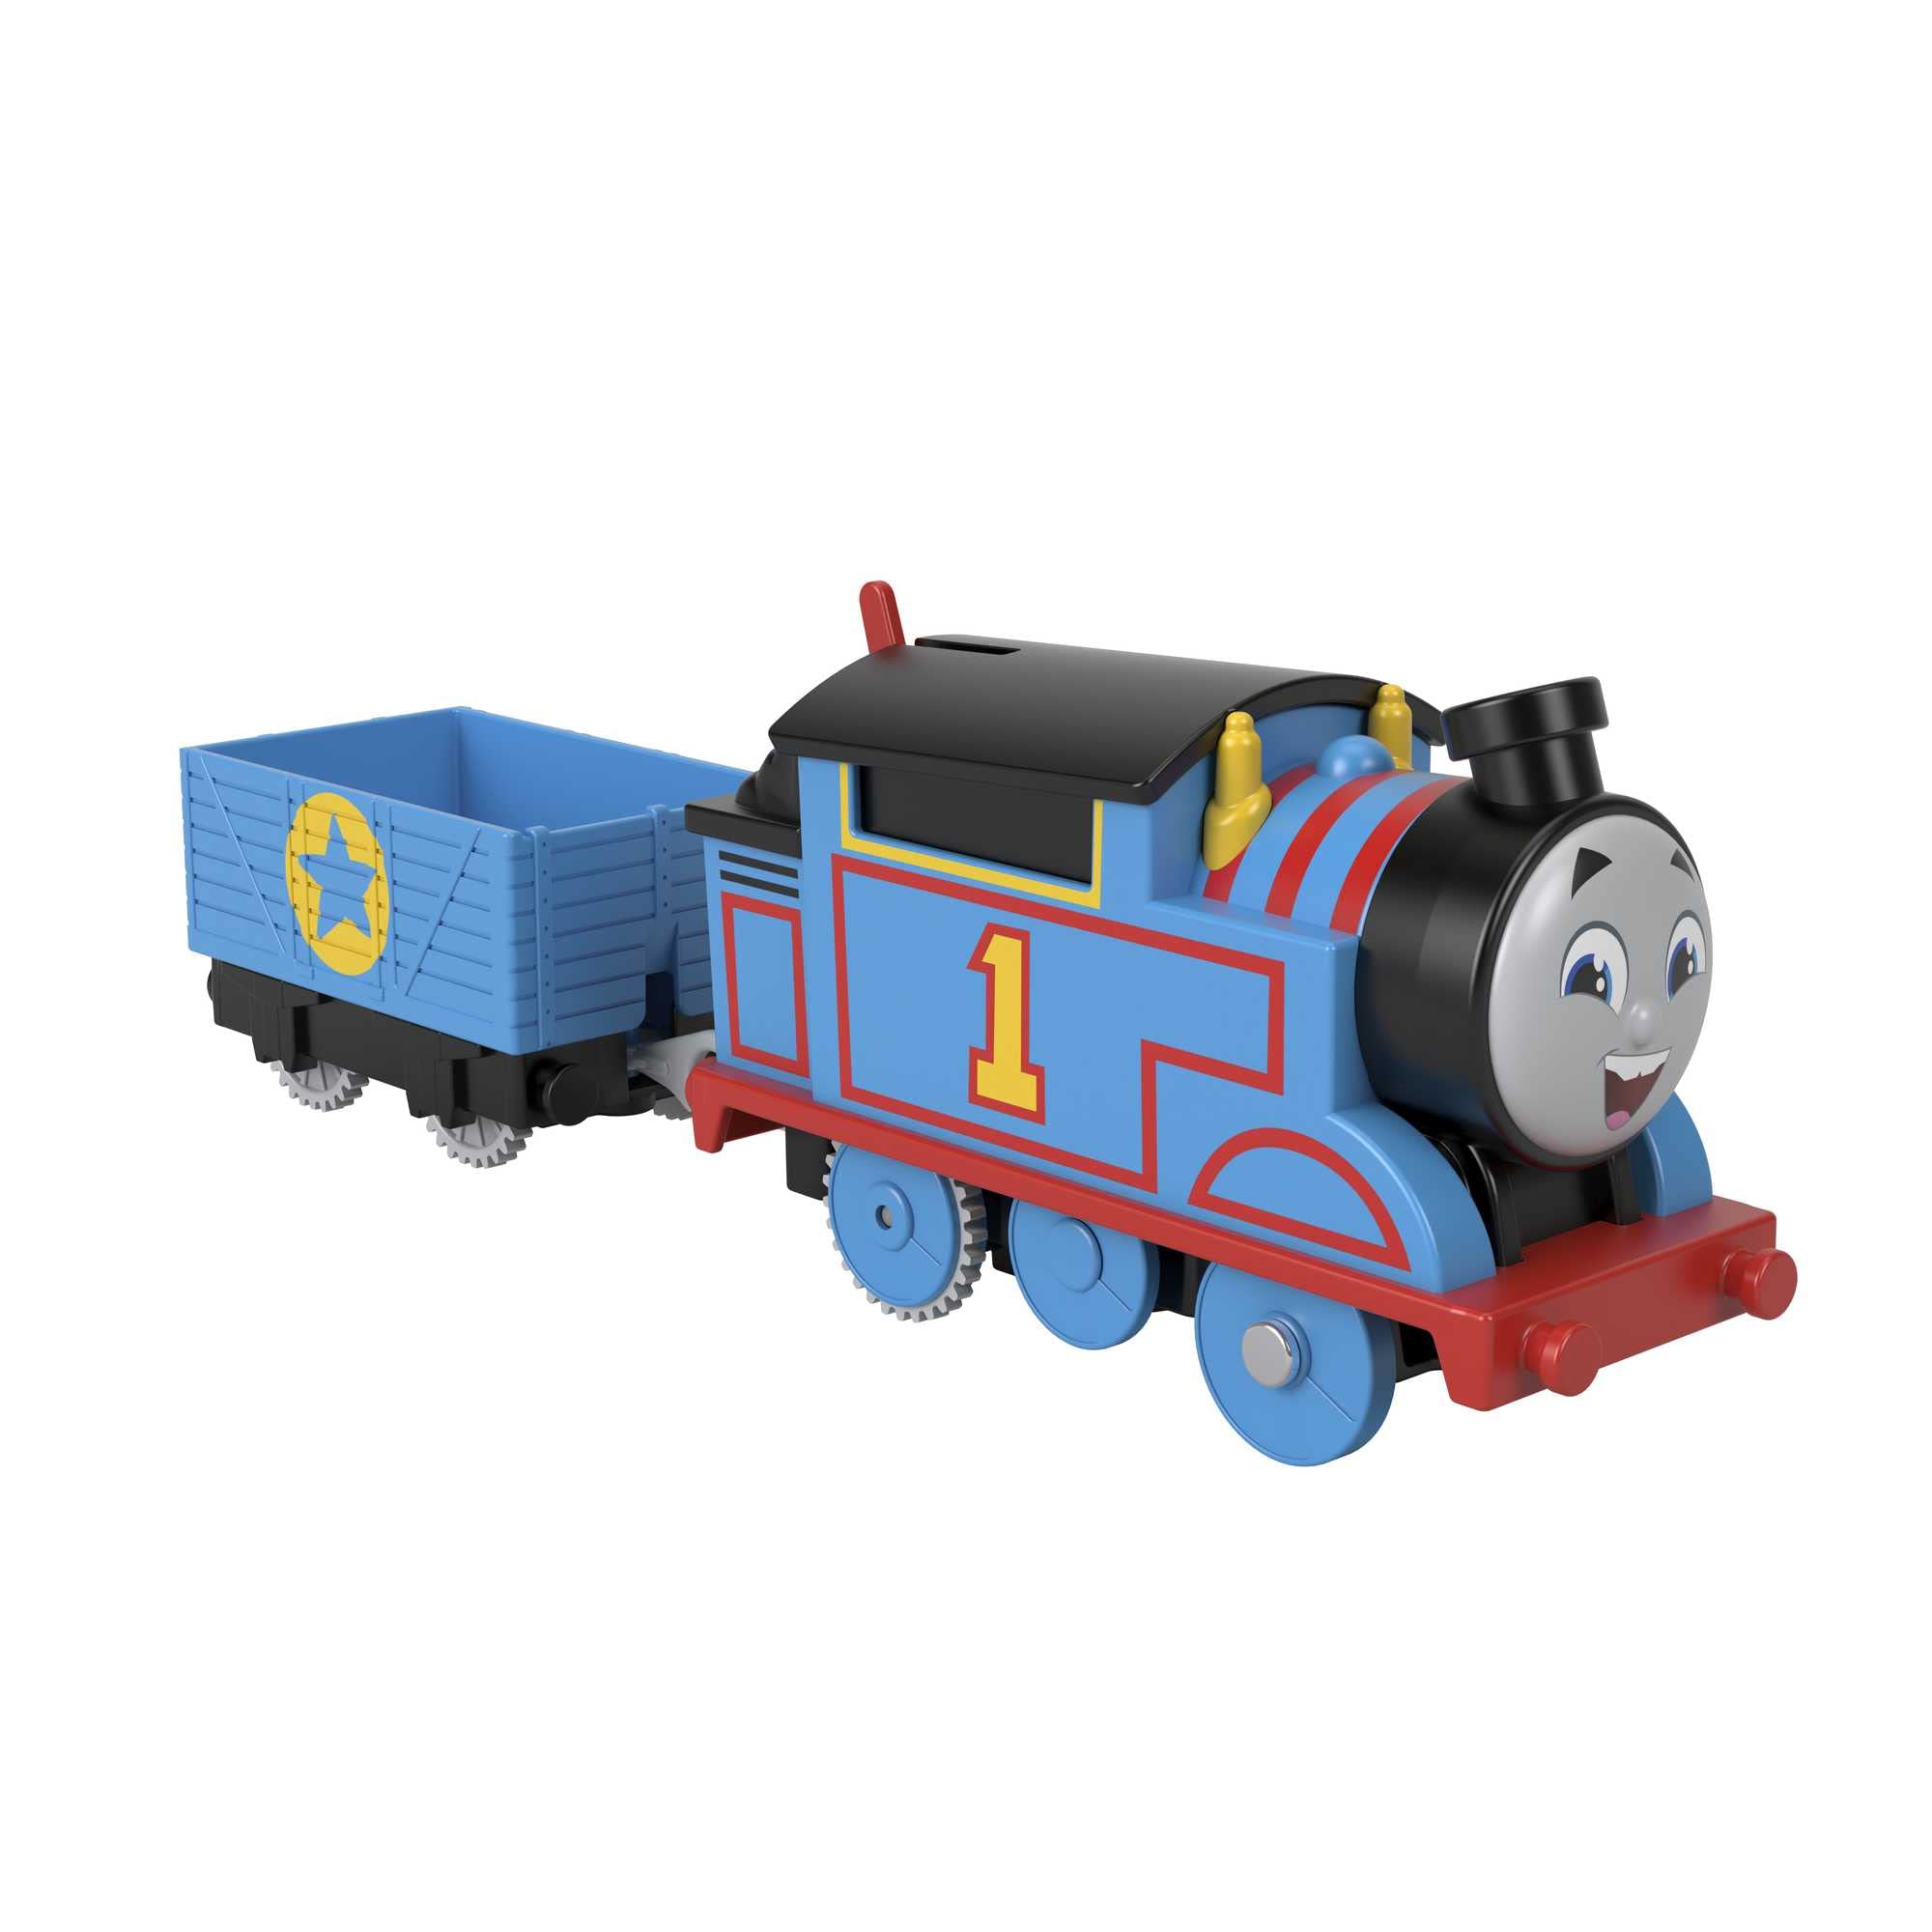 Thomas & Friends Motorized Toy Train Thomas Battery-Powered Engine w/ Cargo  $5.49 + Free Shipping w/ Prime or on $35+